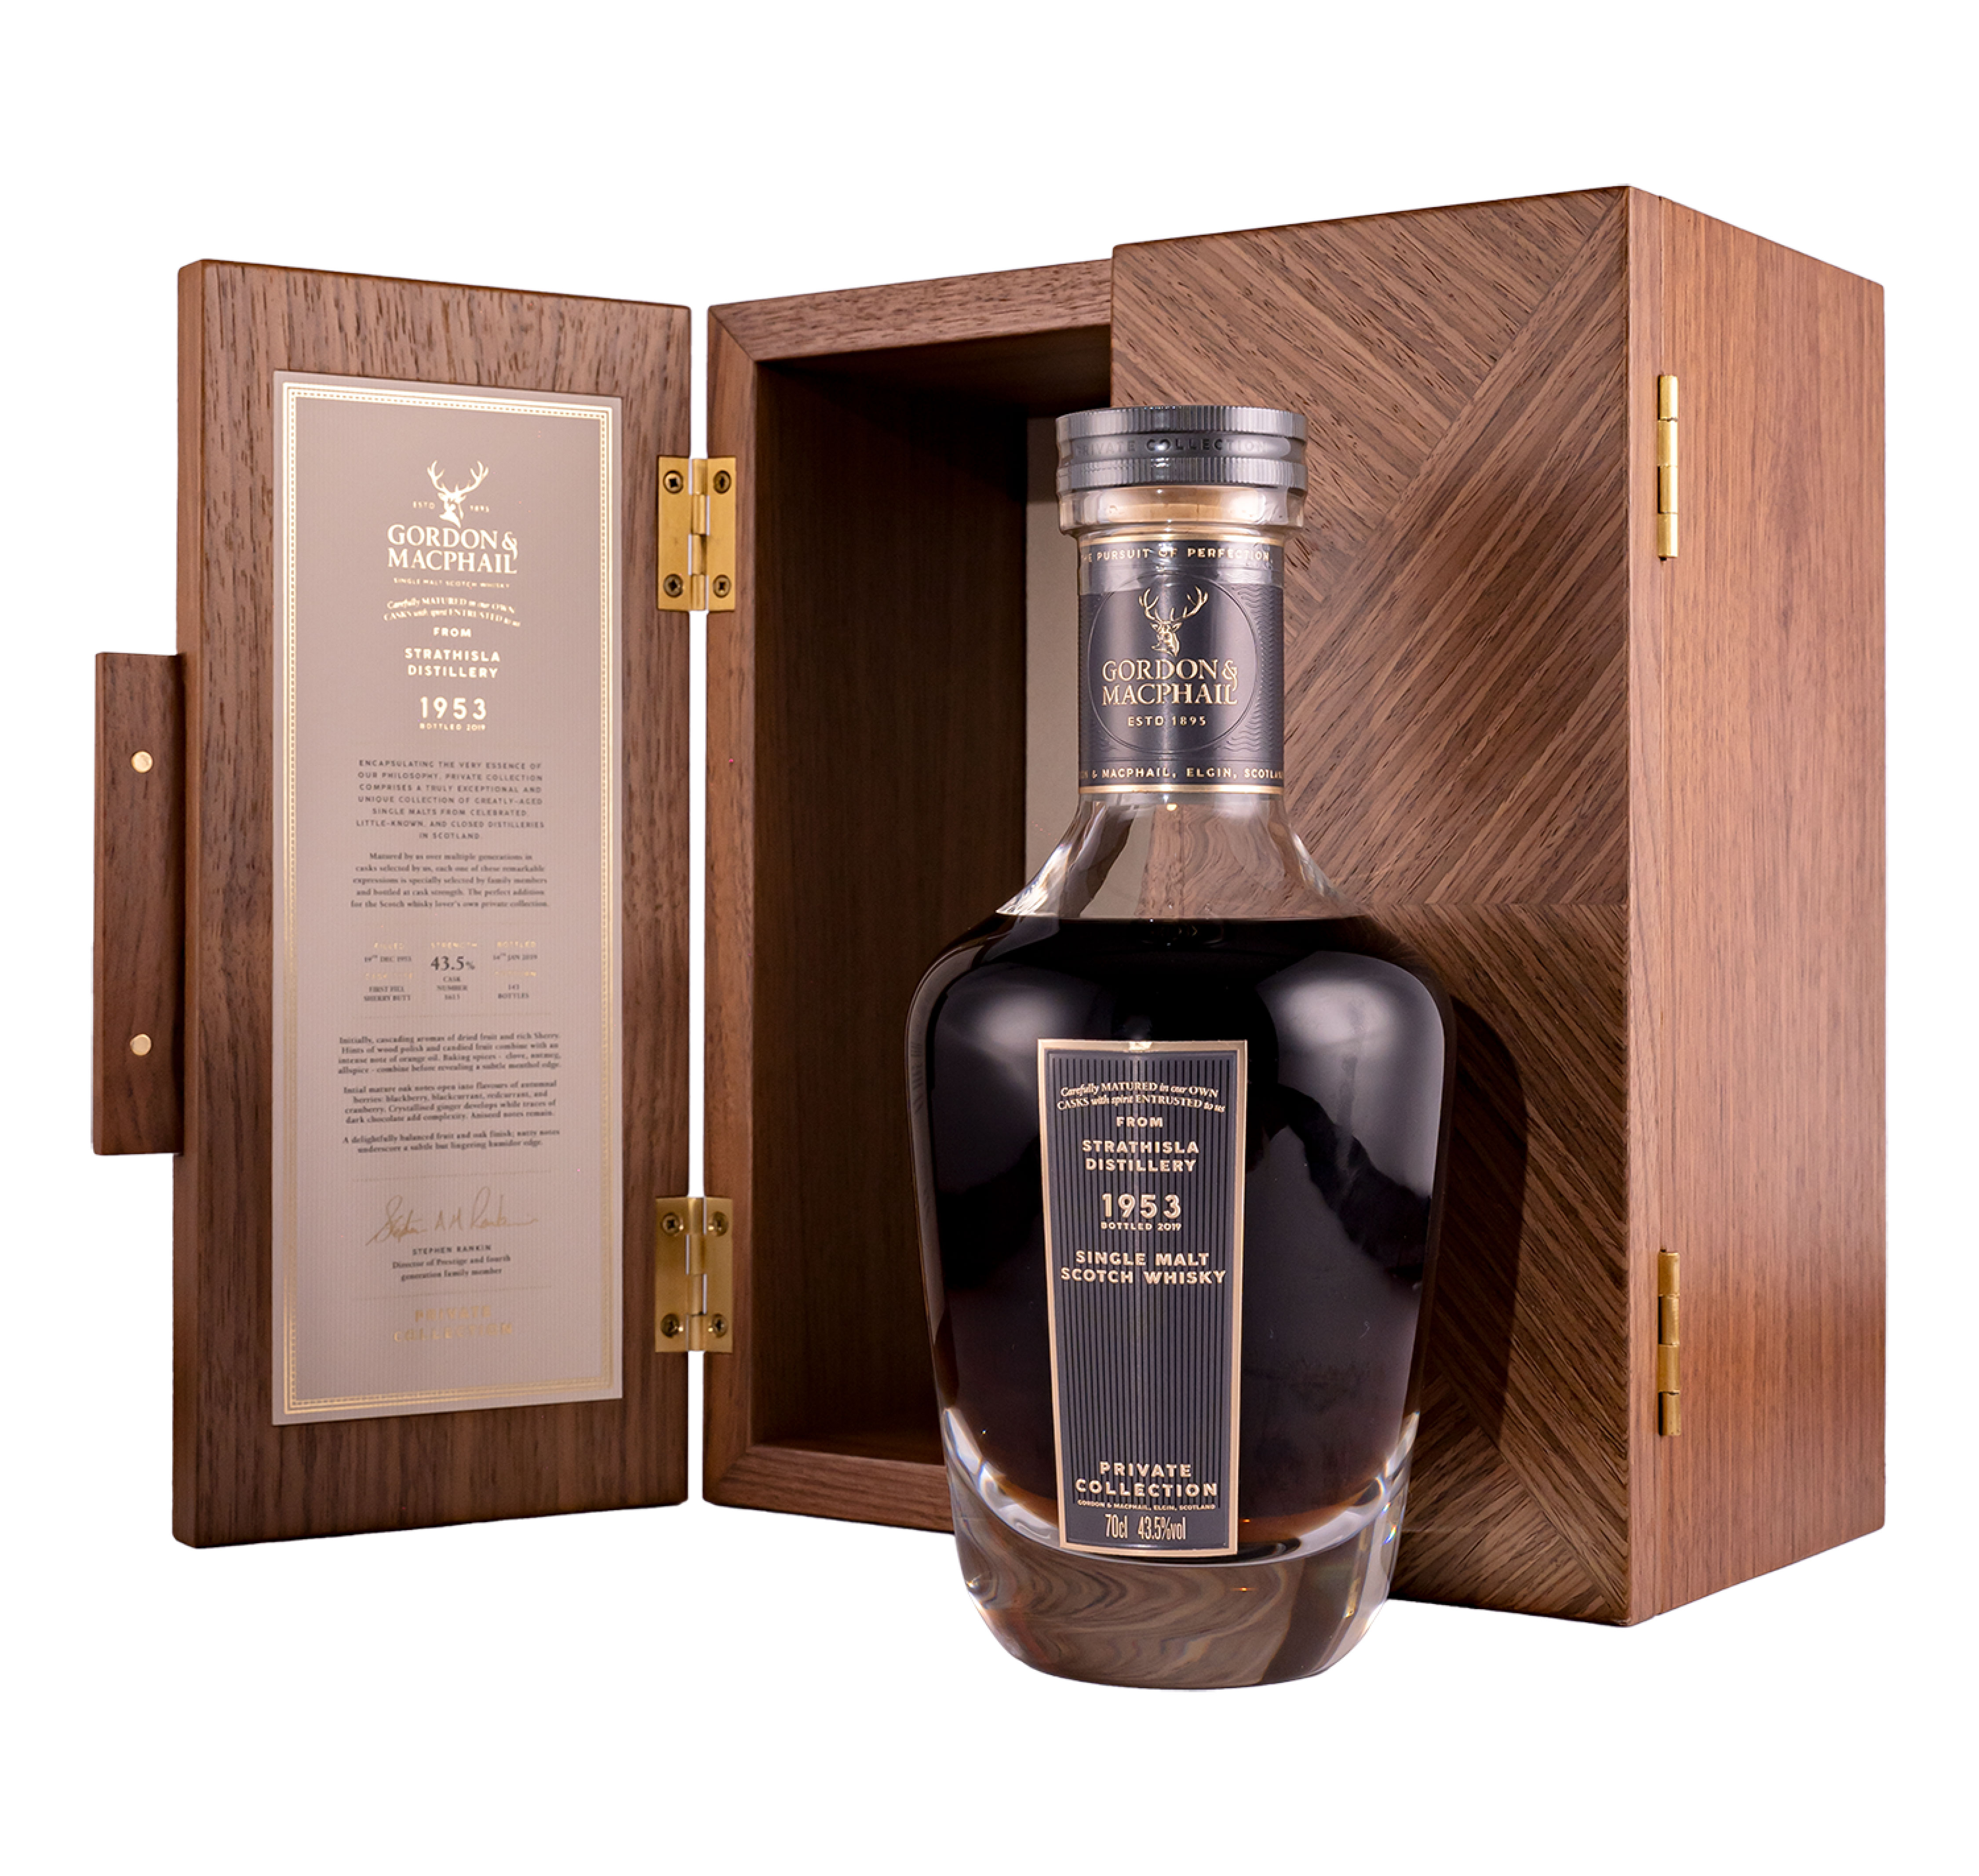 Gordon & MacPhail Private Collection from Strathisla Distillery Single Malt Scotch Whisky 1953